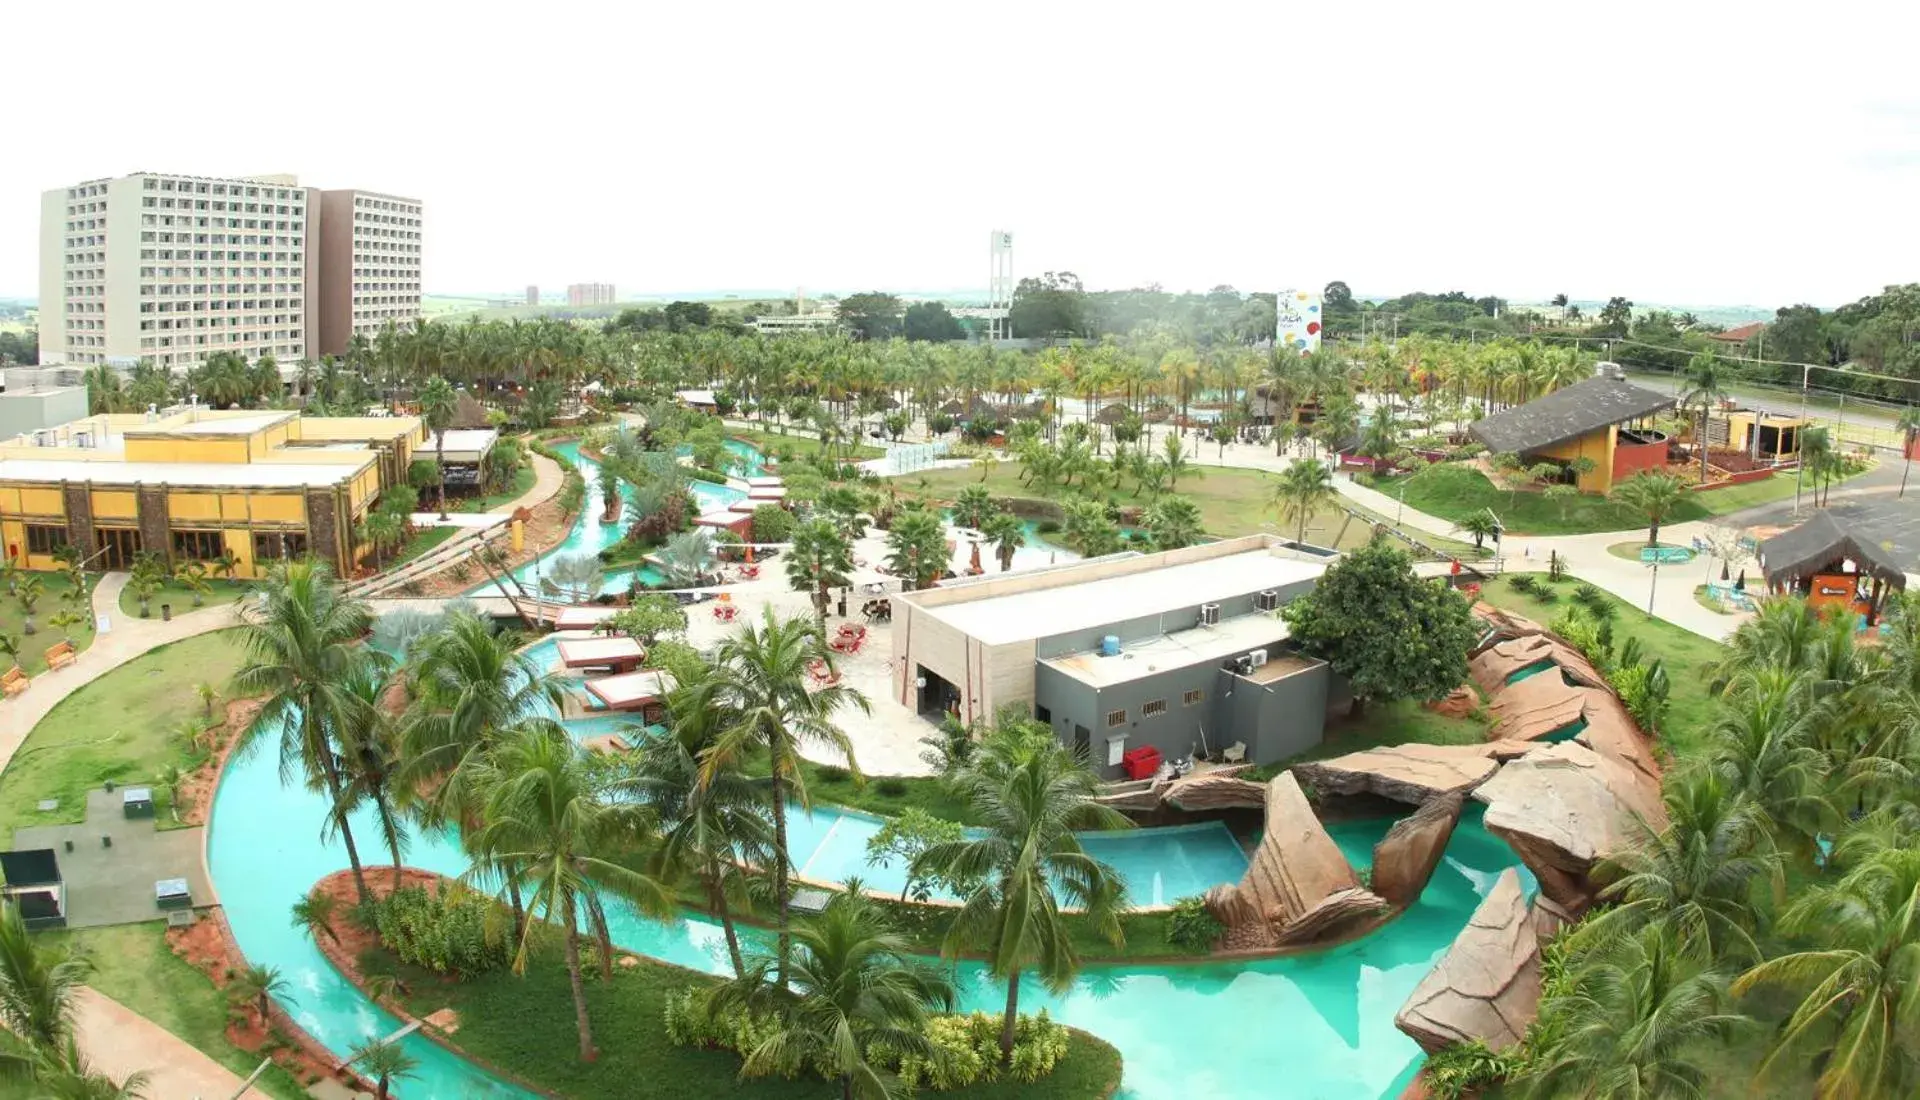 Aqua park, Bird's-eye View in Hot Beach Resort